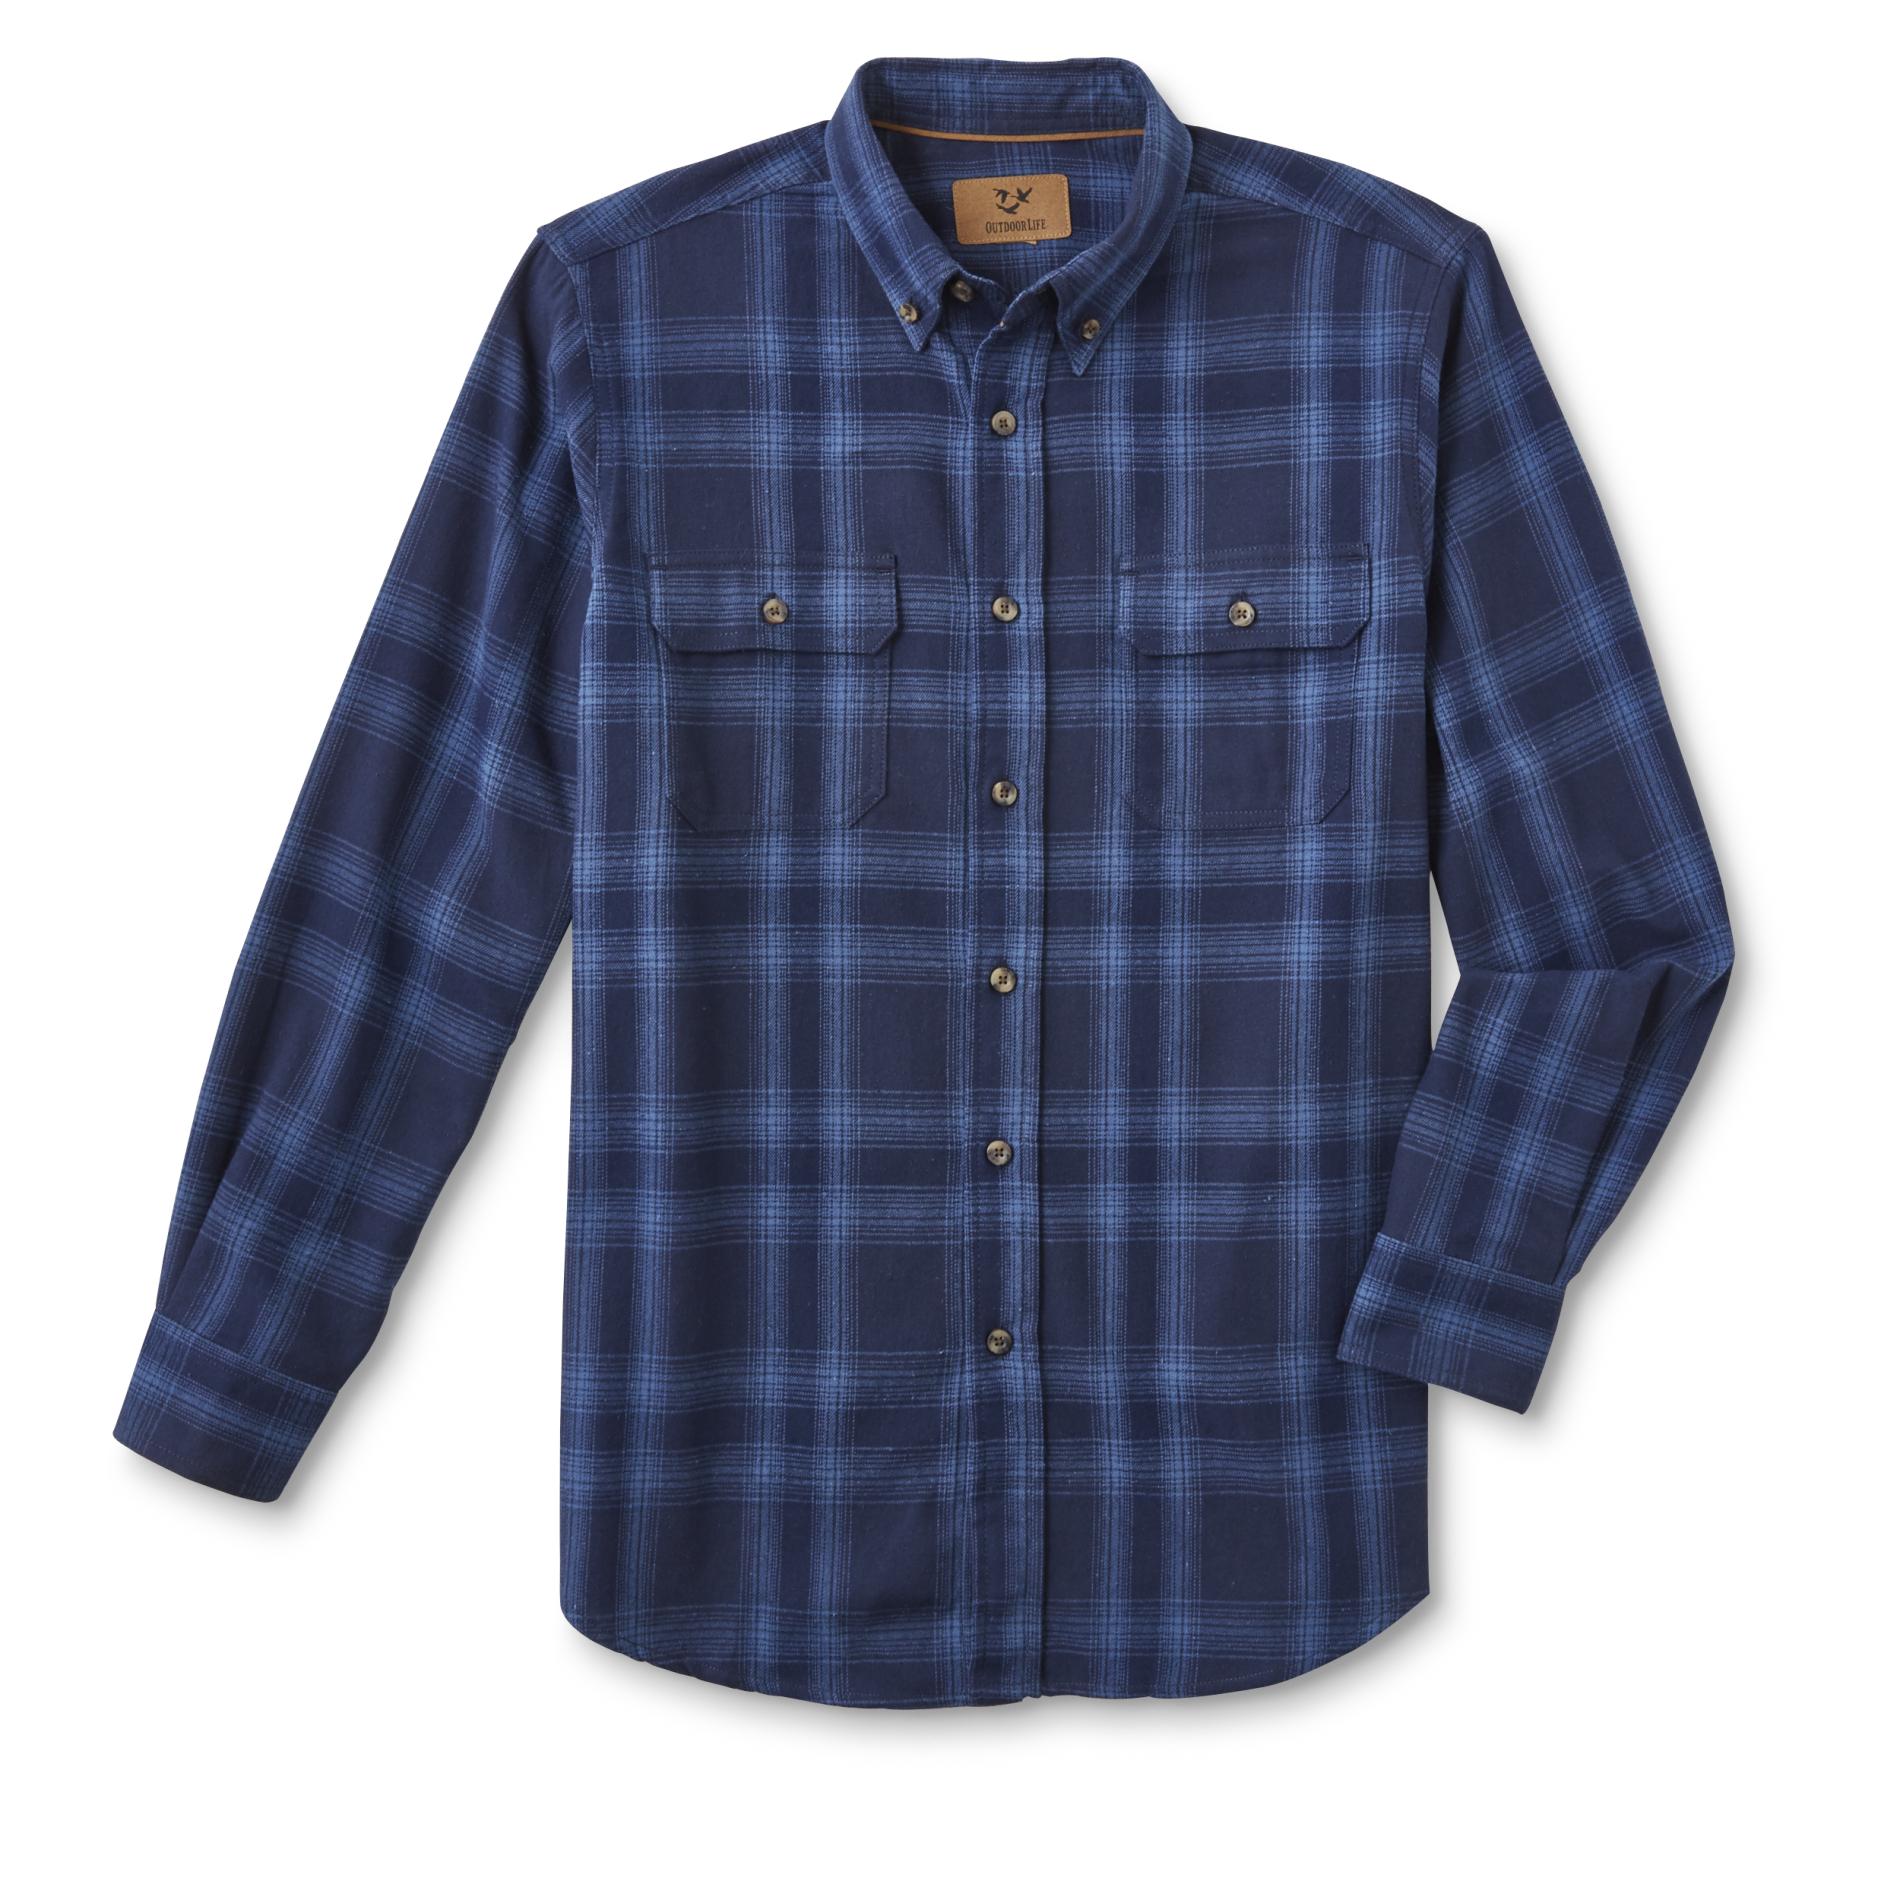 Outdoor Life® Men's Flannel Shirt - Plaid